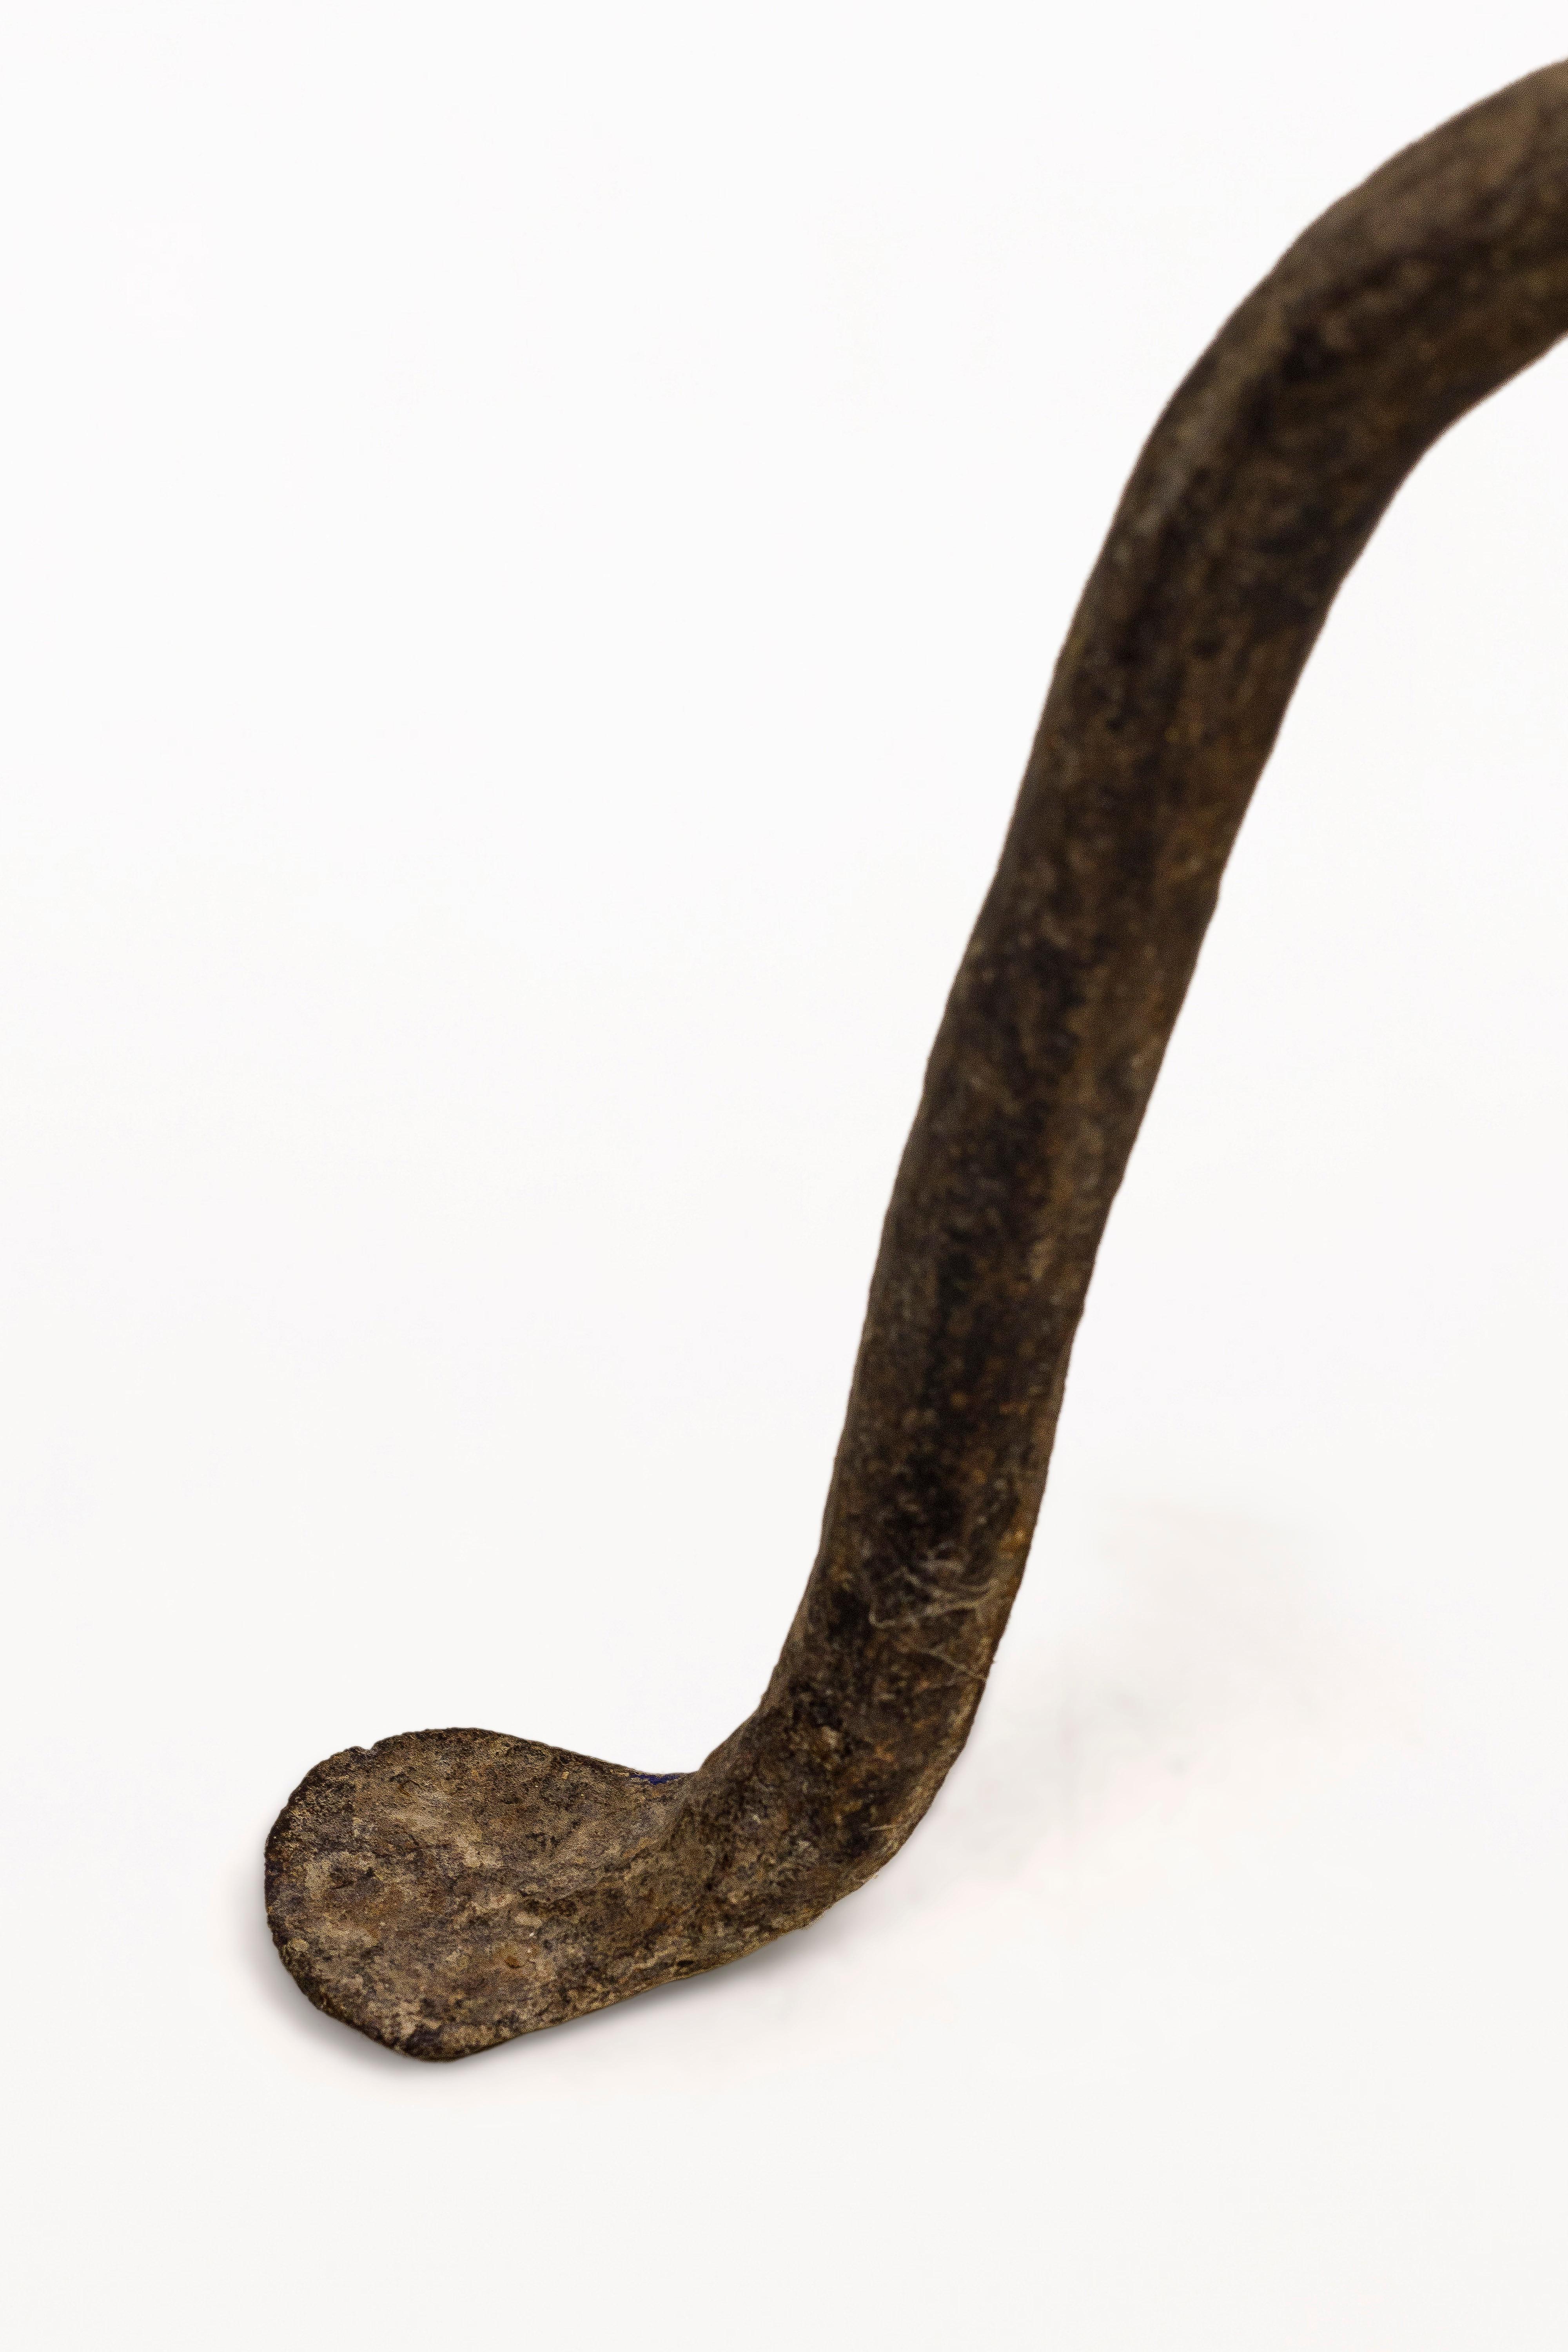 Iron Candleholder, 15th Century, Spain 1